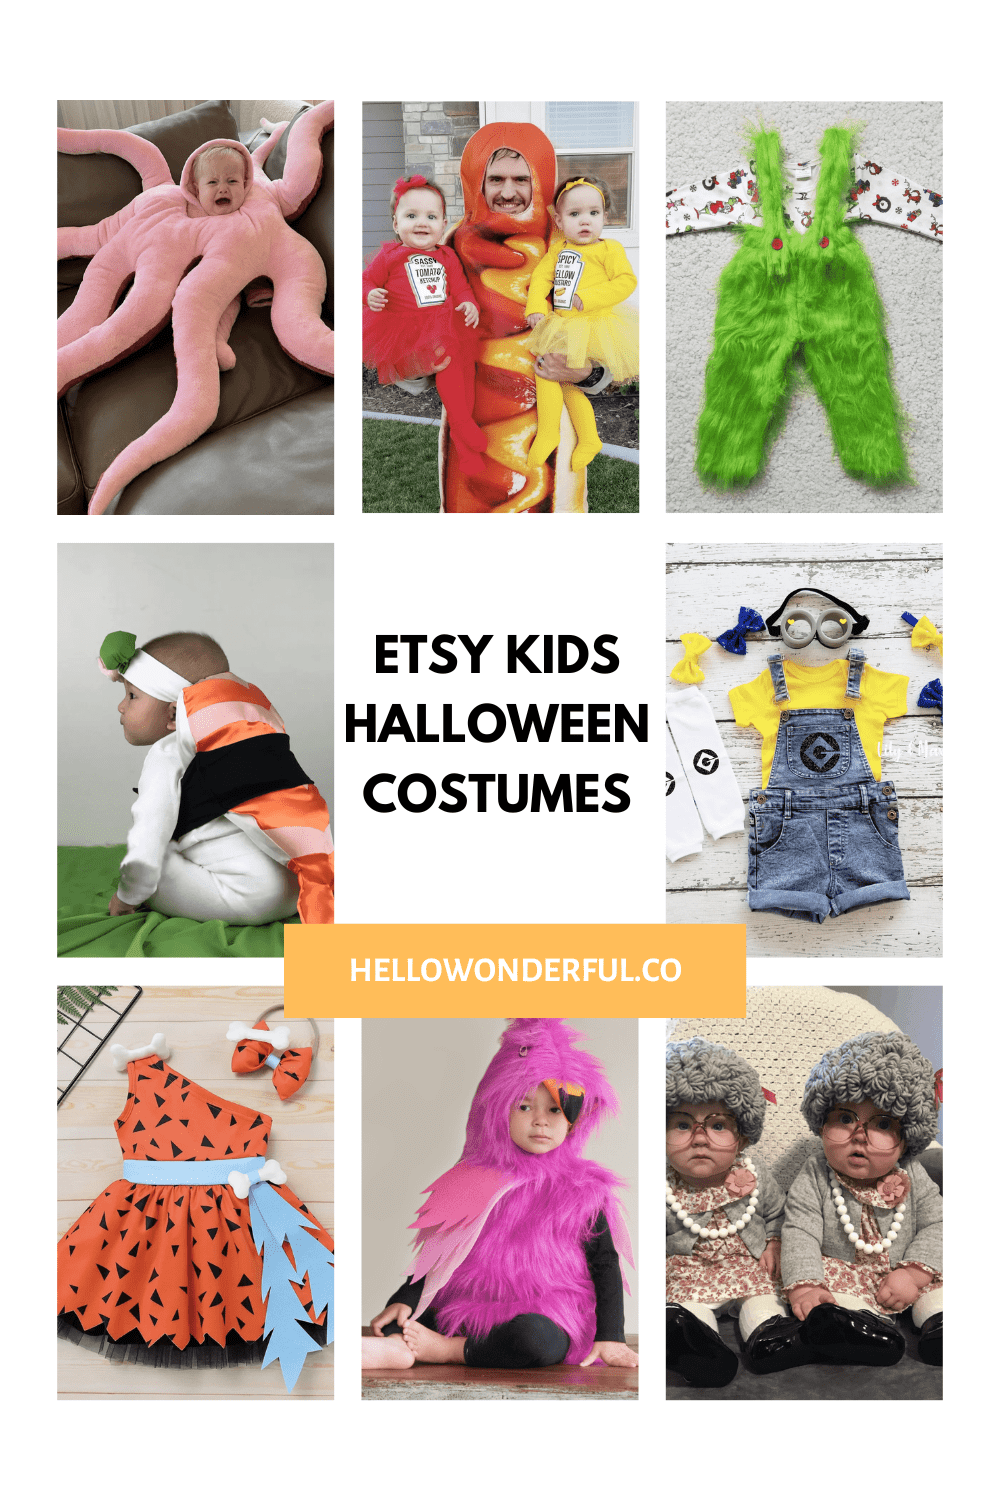 Etsy Kids Halloween costumes